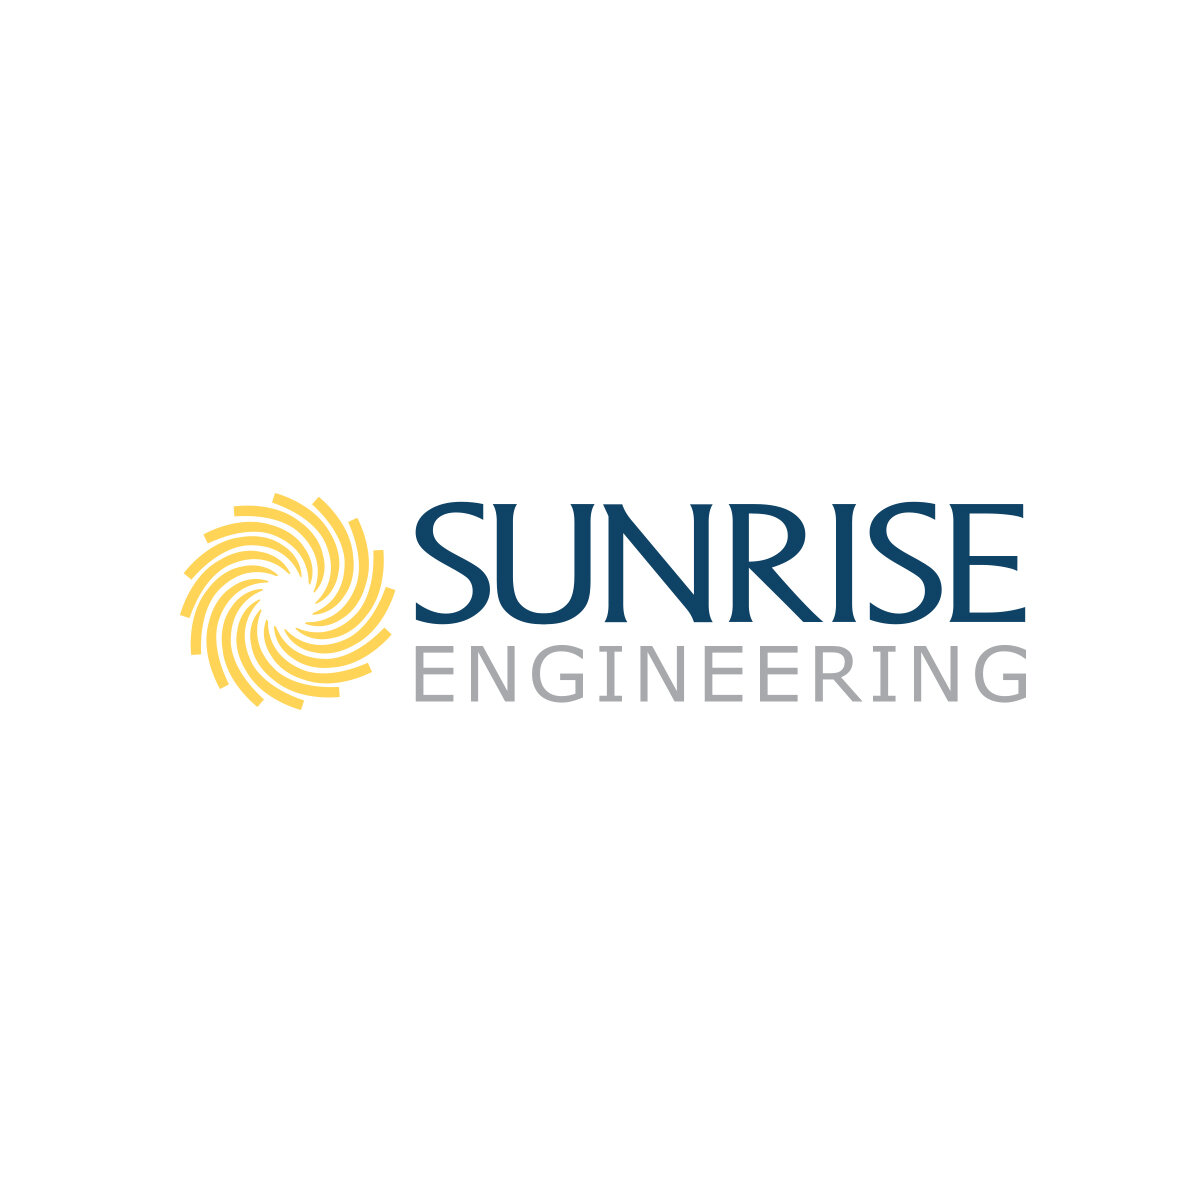 Sunrise Engineering logo.jpg